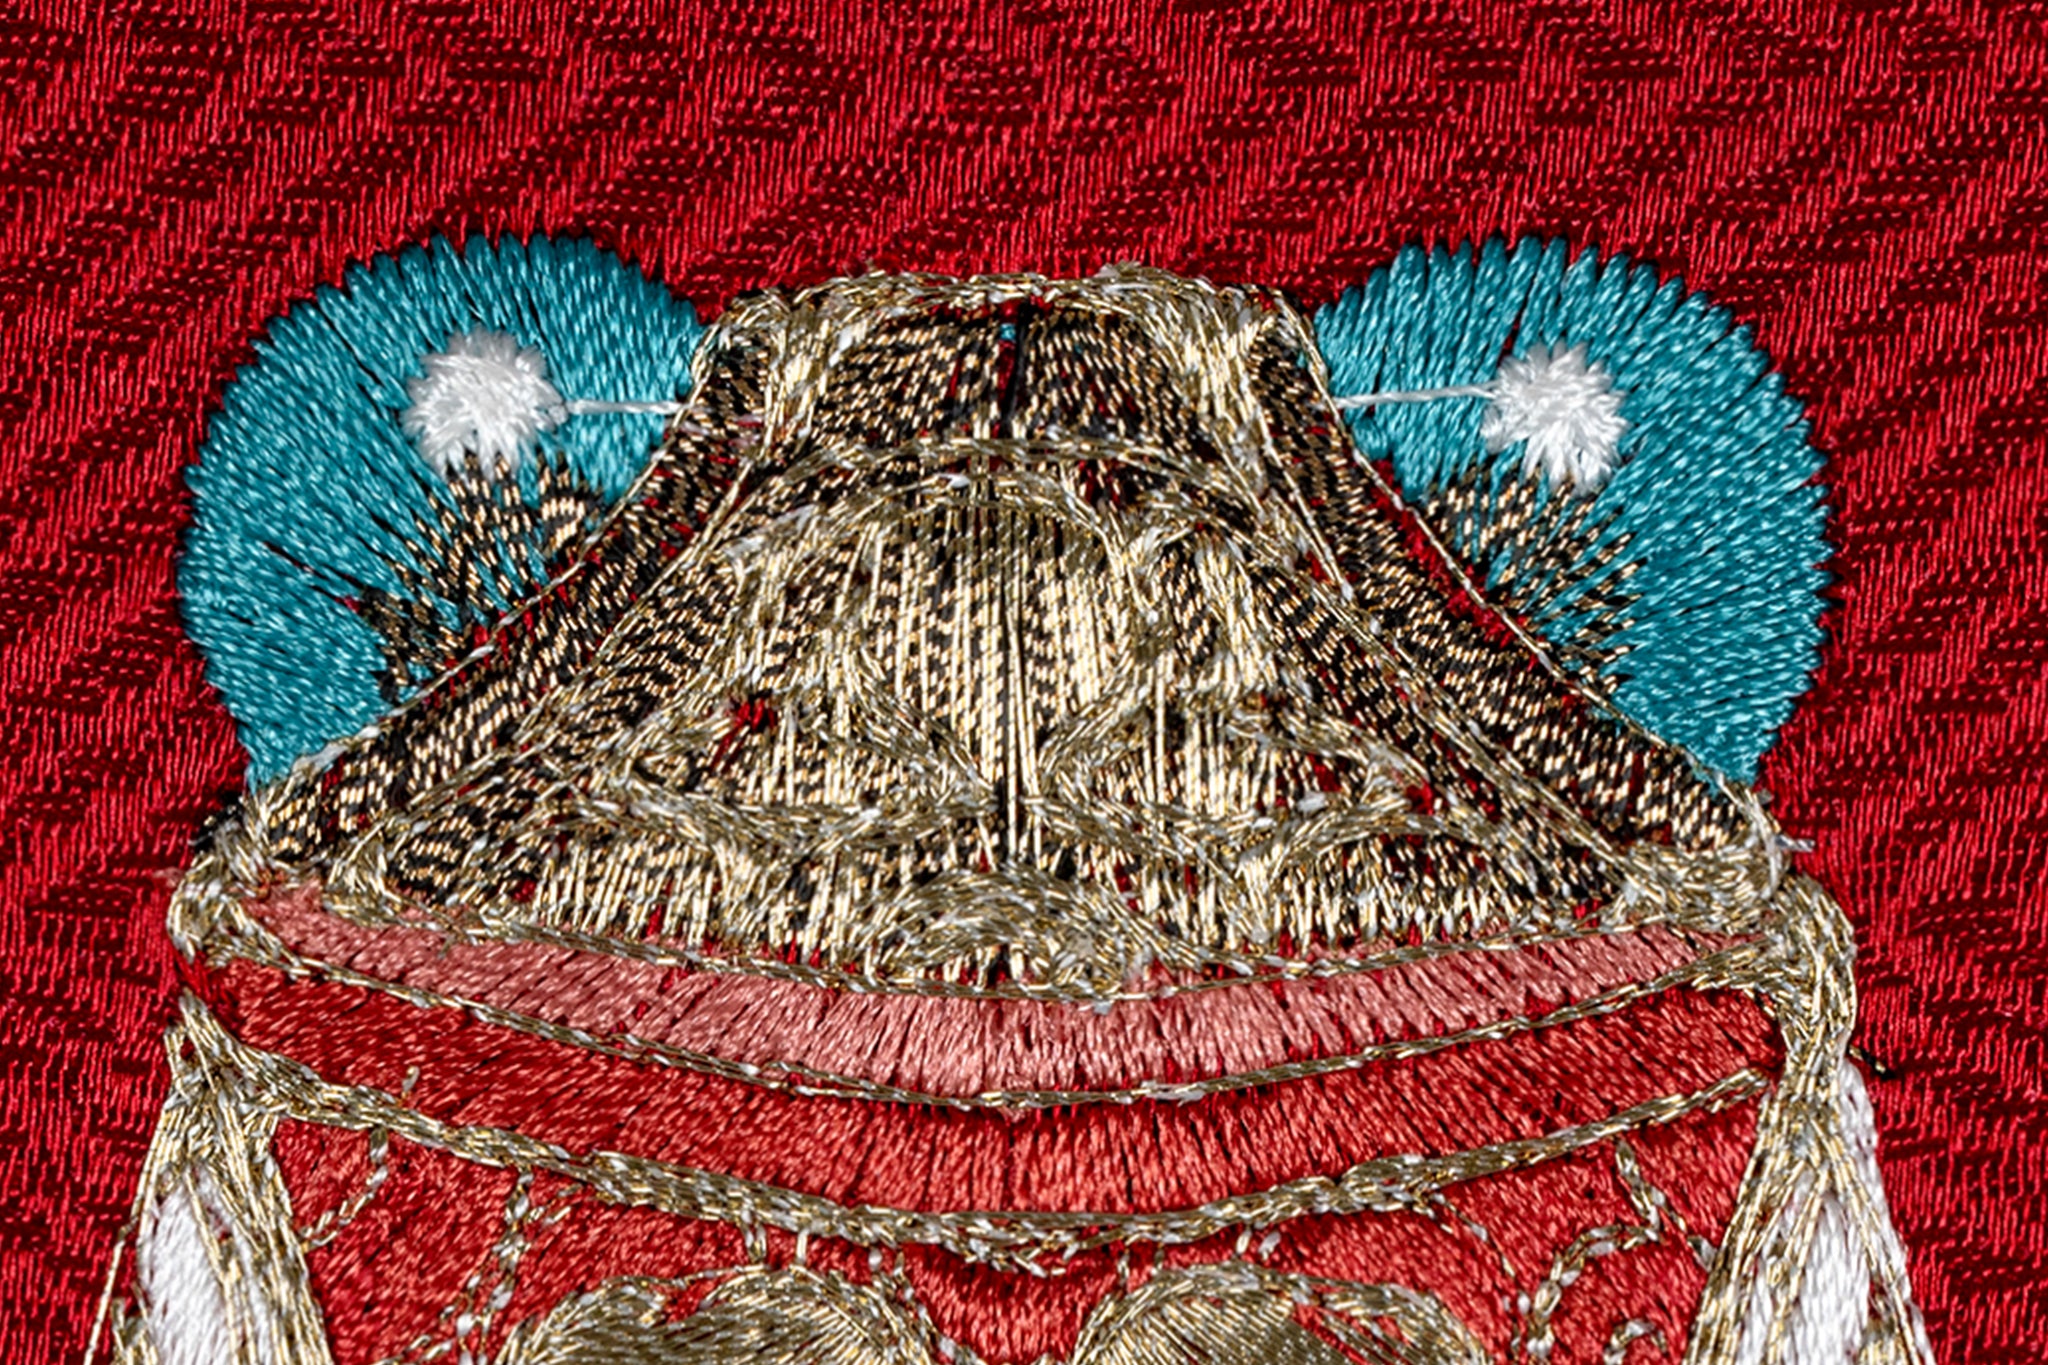 Blue eyes detail on cicada embroidery artwork.